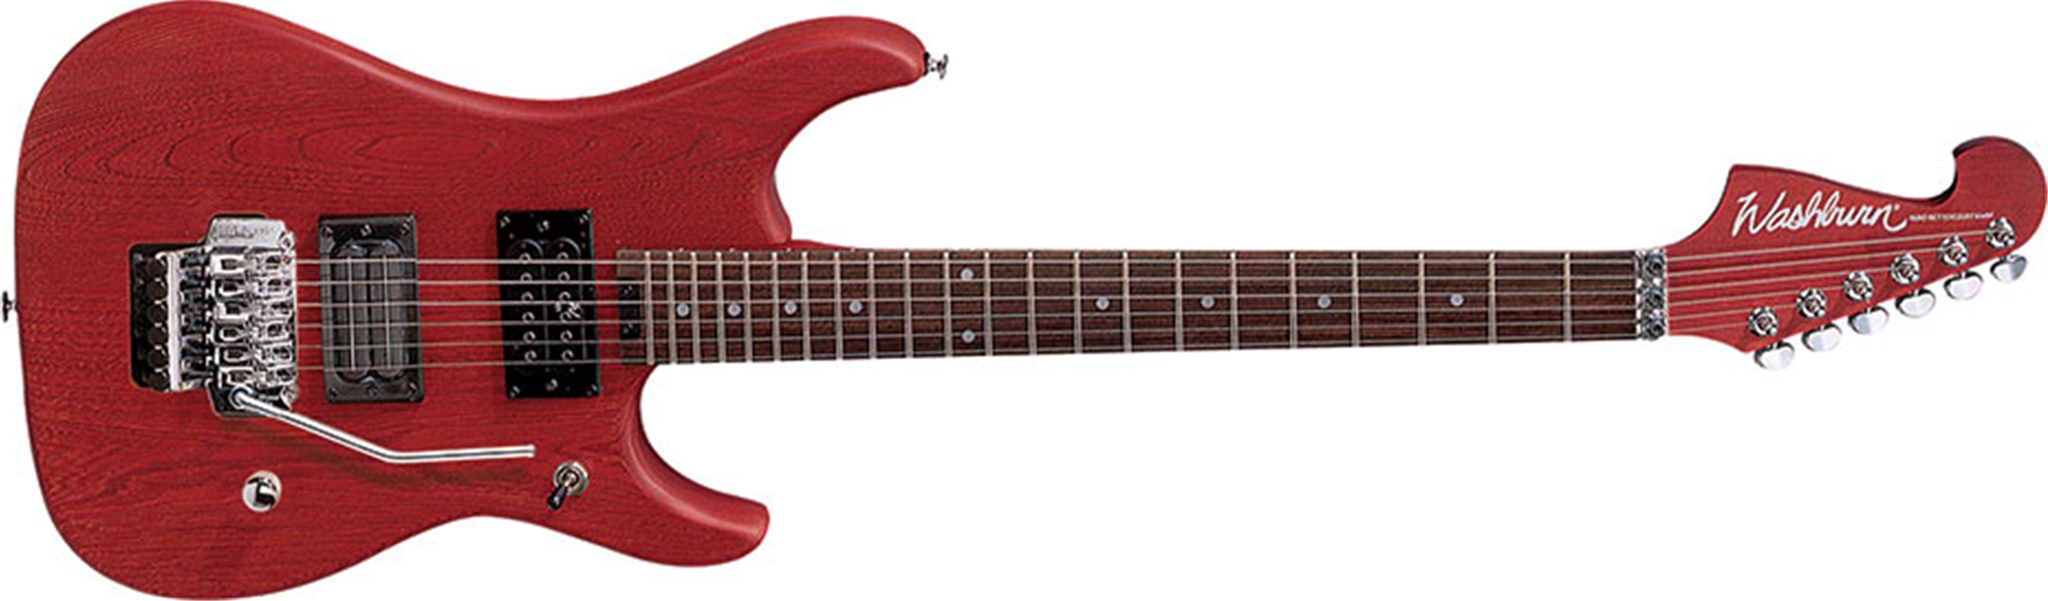 Washburn N2-NUNO   PADAUK STAIN  6-String Electric Guitar 